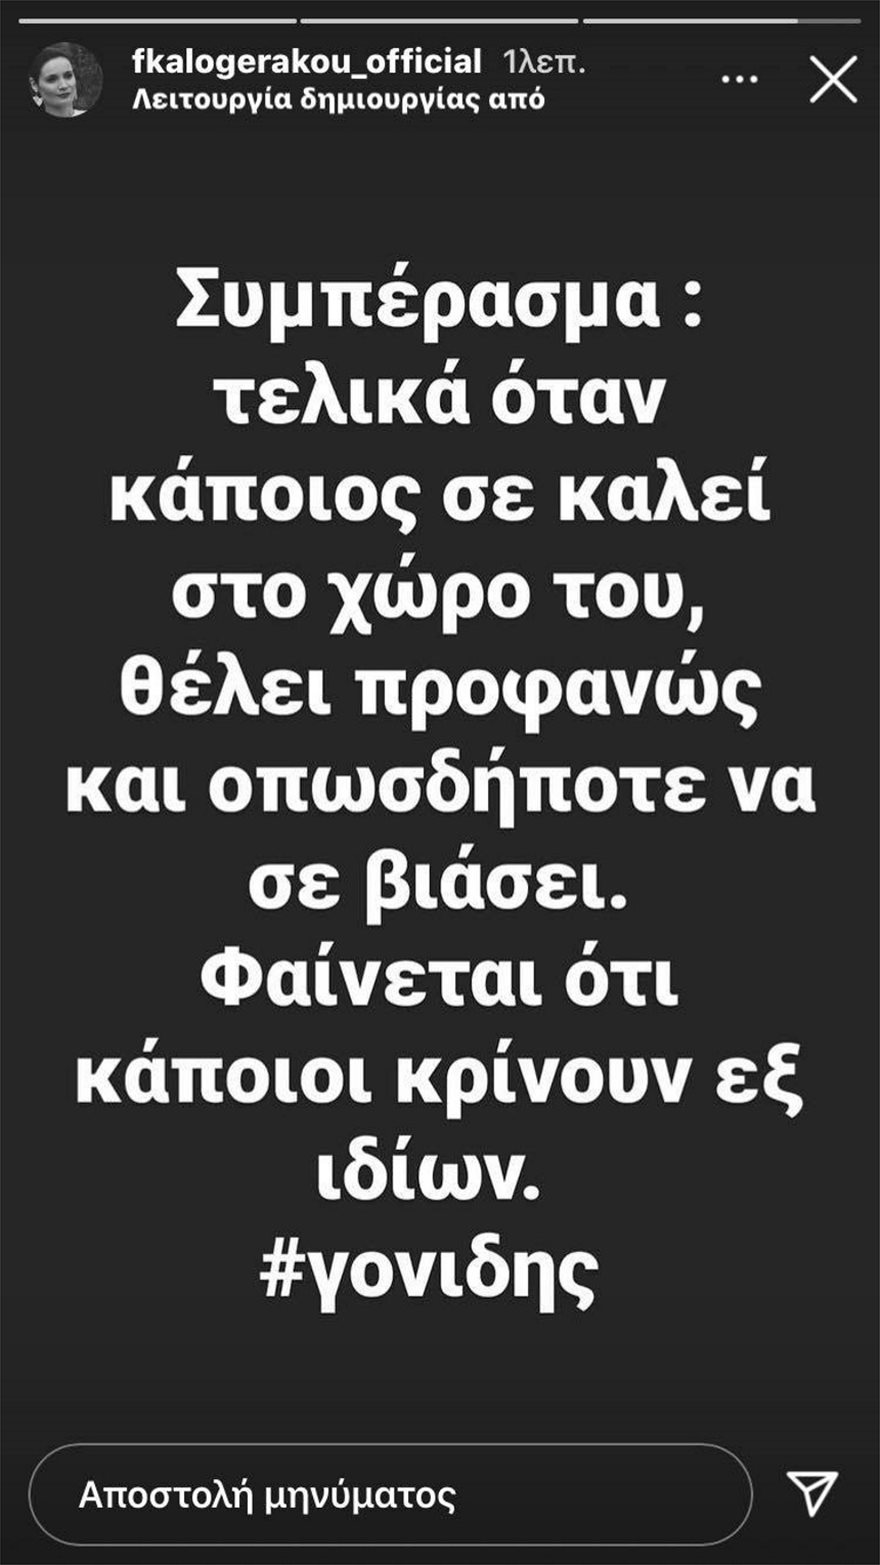 kalogerakou_